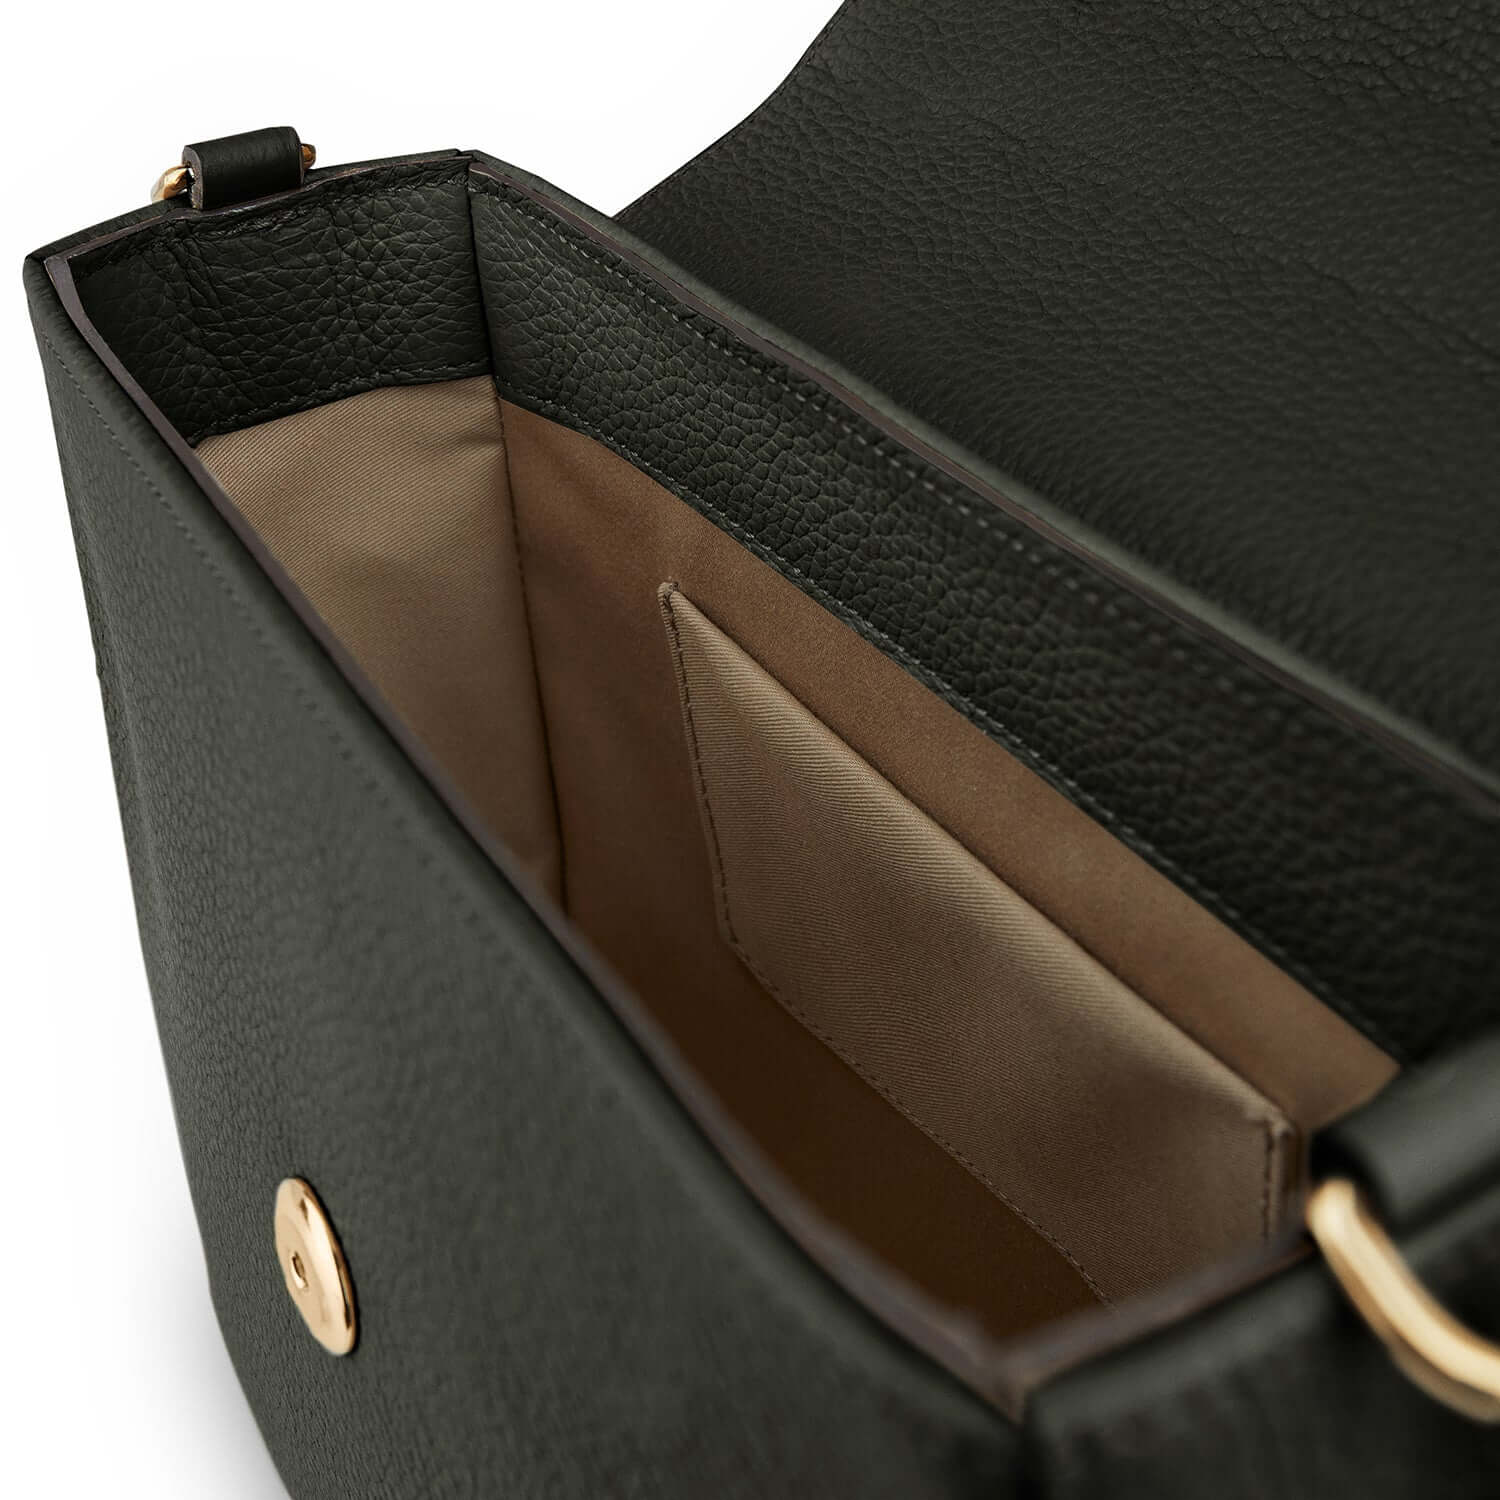 100% cotton lined leather handbag british made